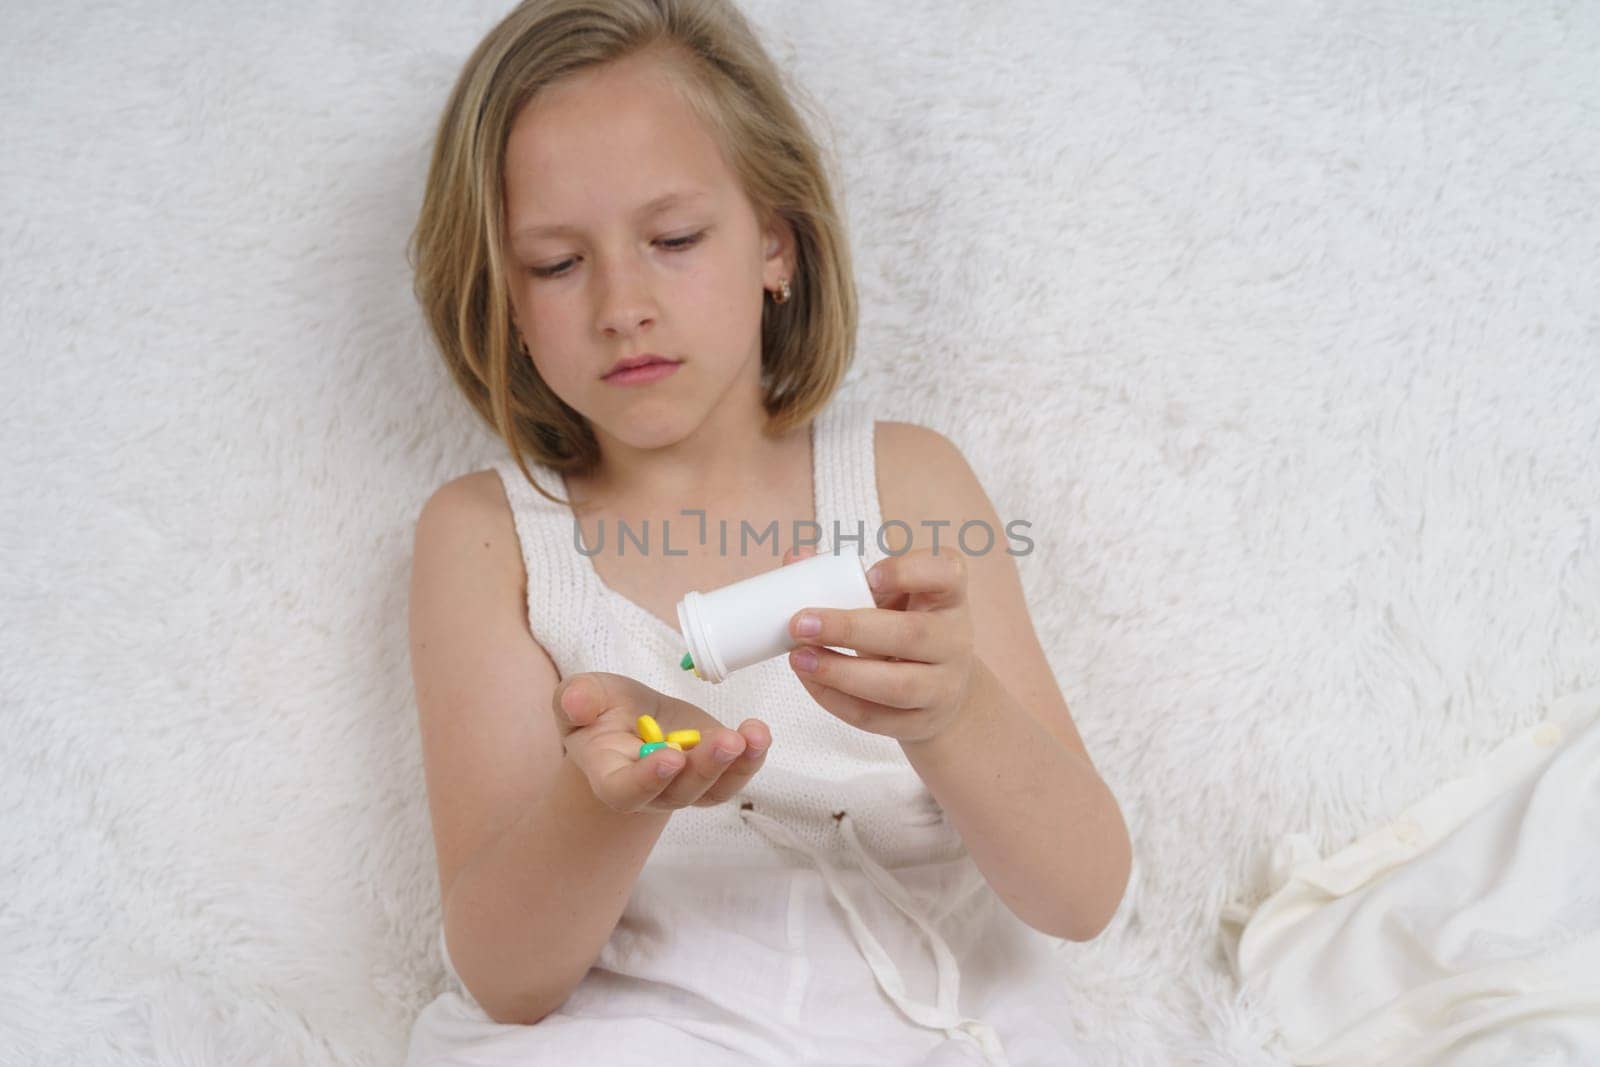 Sick teenage girl spills pills on her hand. Medical concept.